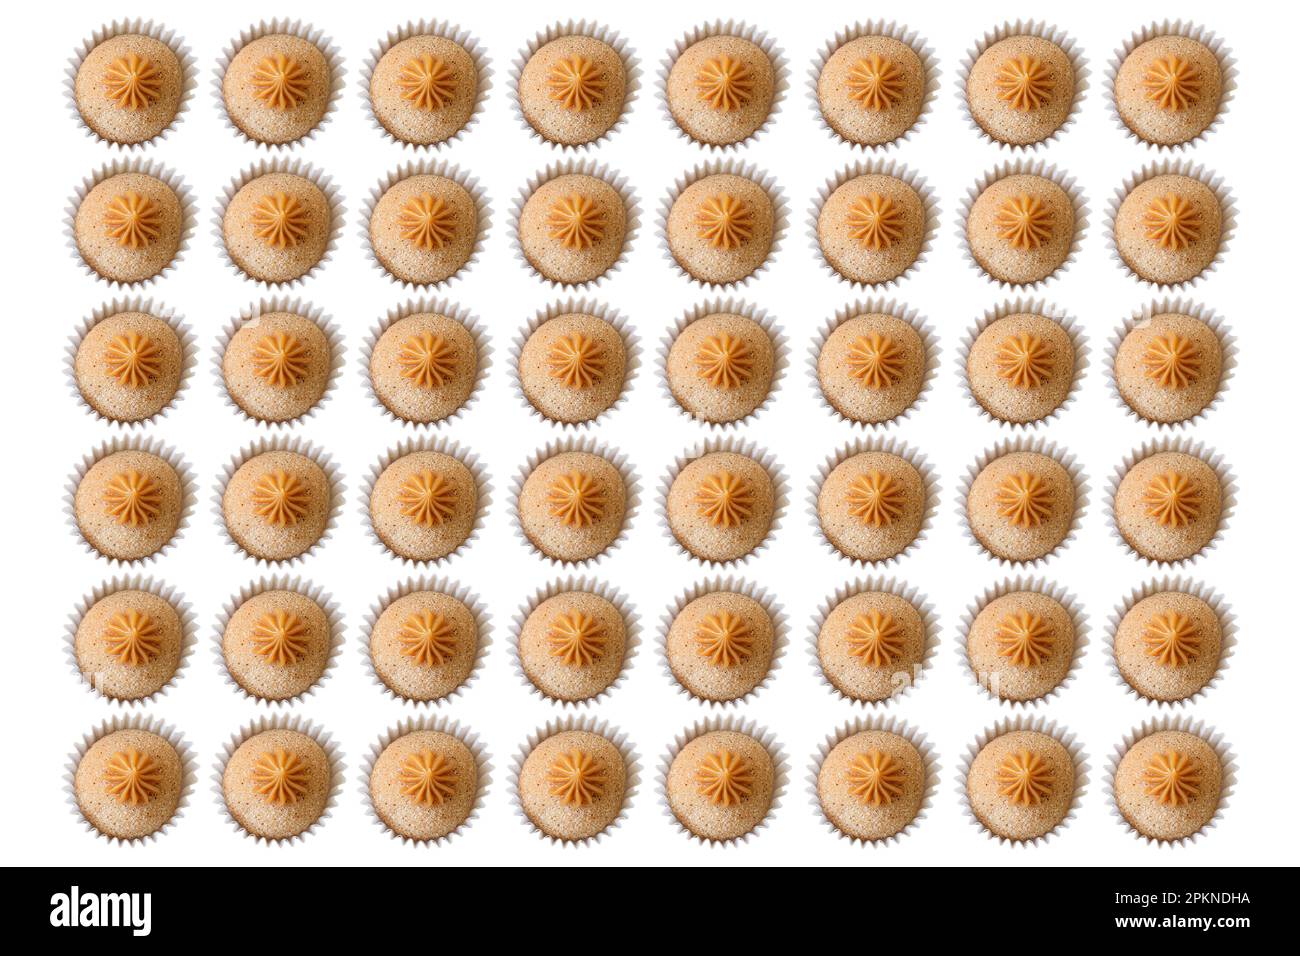 Several Brazilian fudge balls of churros arranged in a rectangular shape. Stock Photo